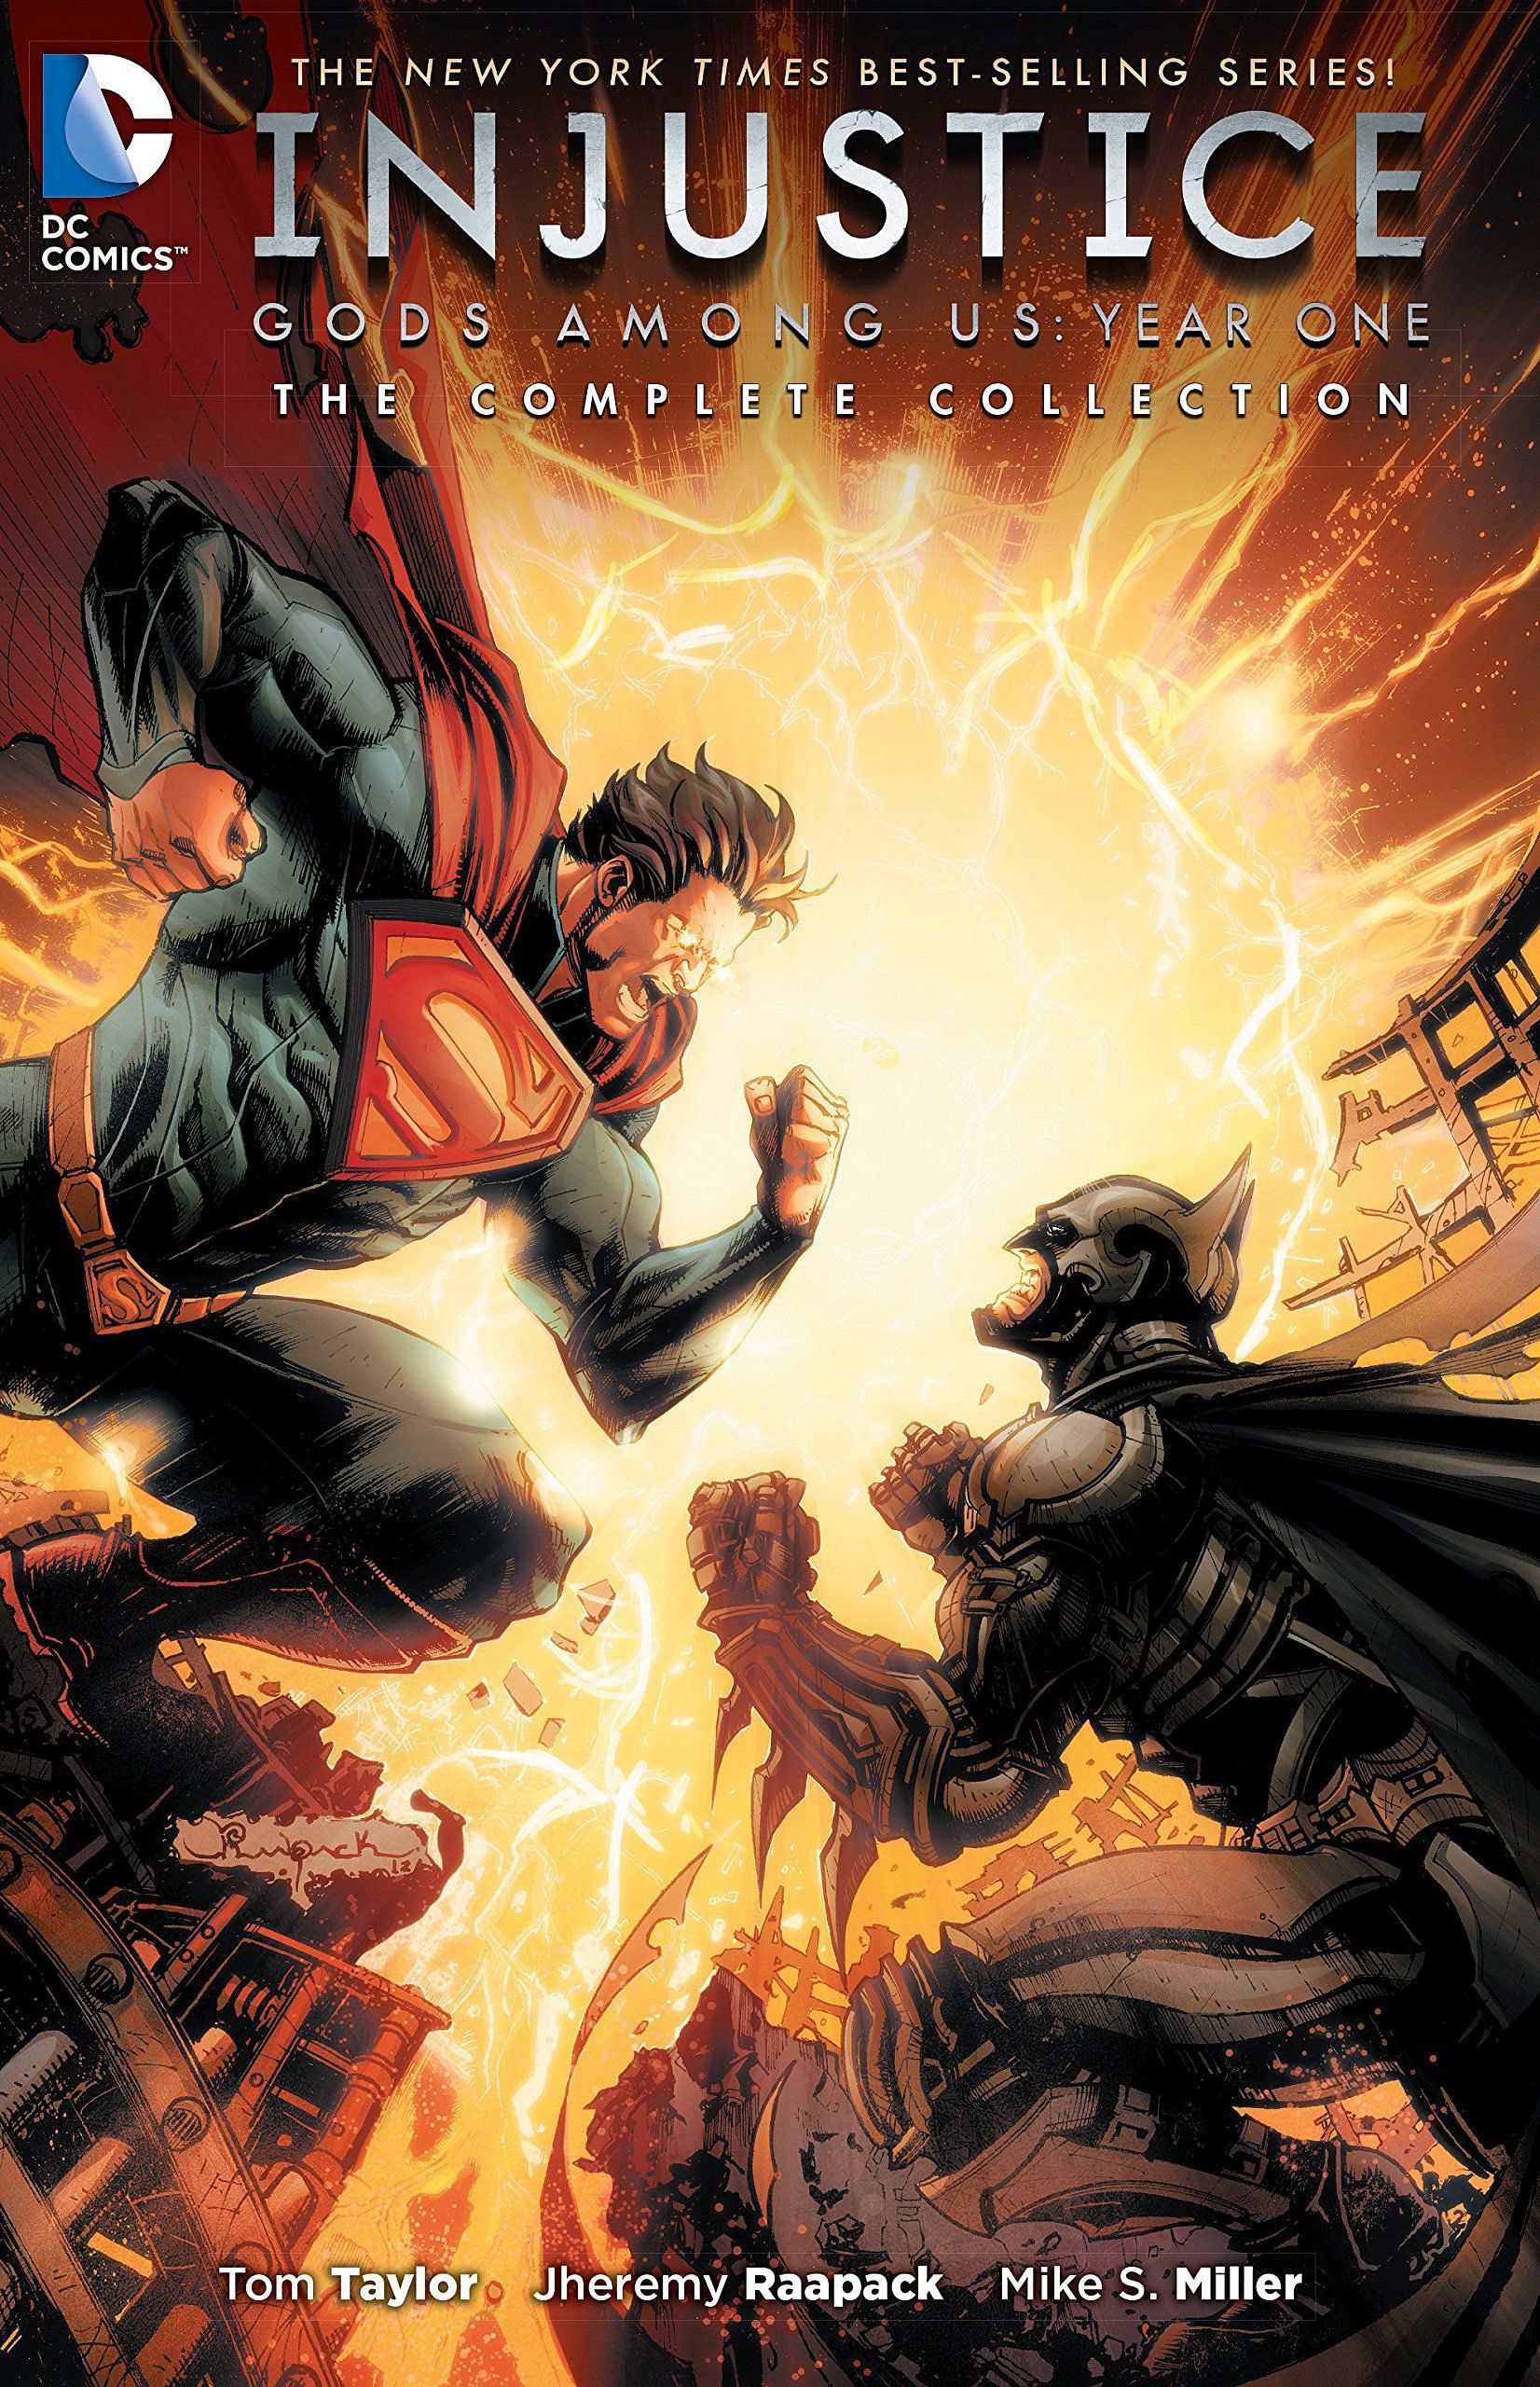 Injustice Gods Among Us Cover (Image via DC Comics)